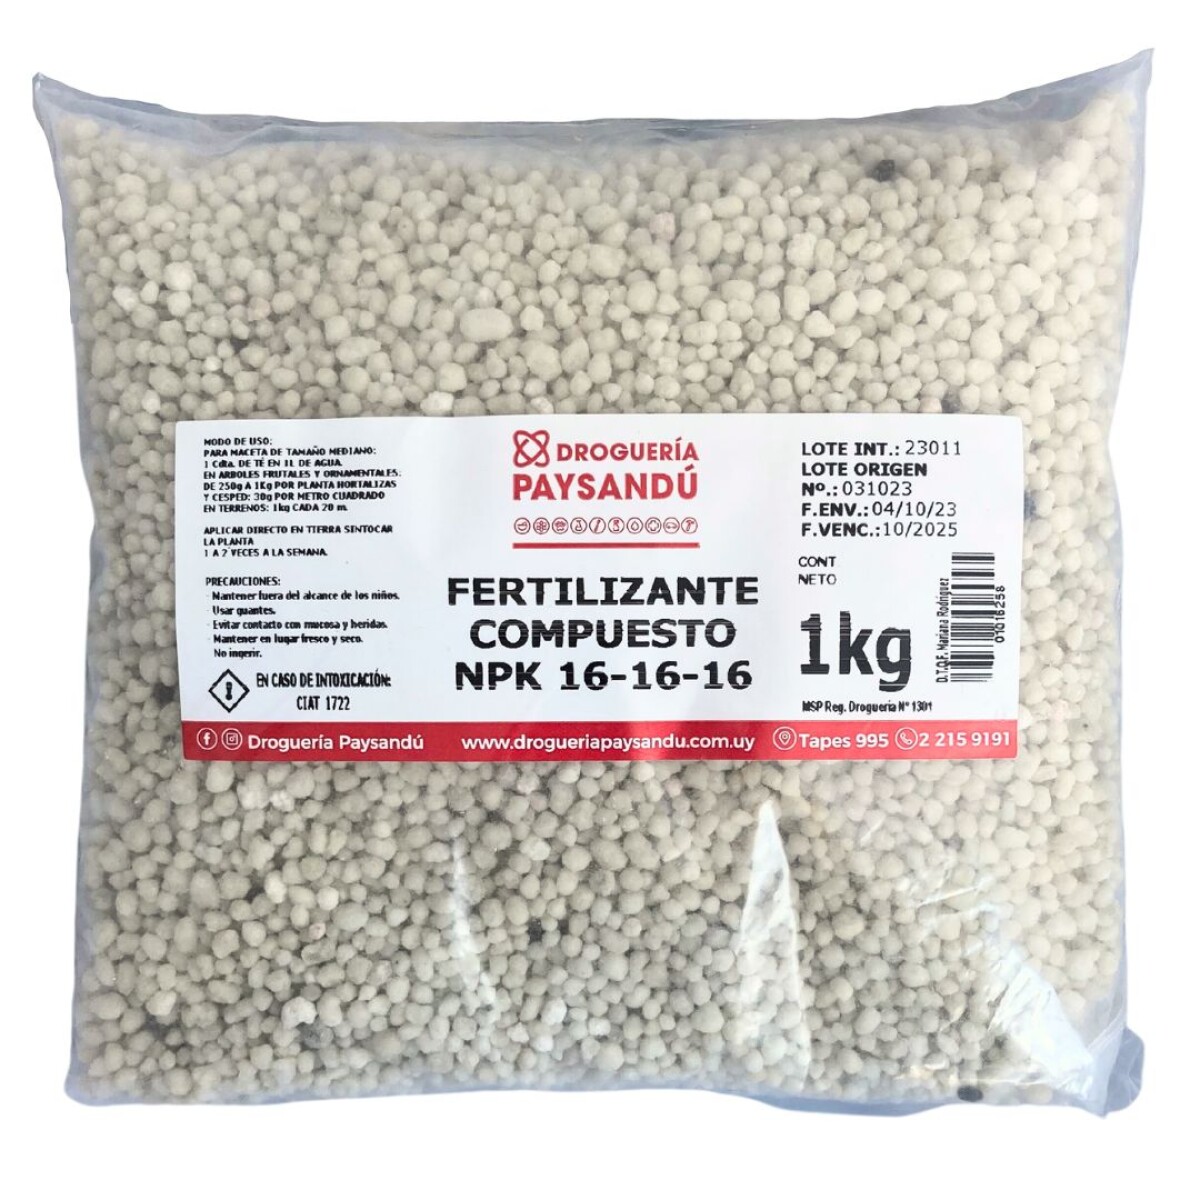 Fertilizante Compuesto NPK 16-16-16 1 Kg - 1 Kg 